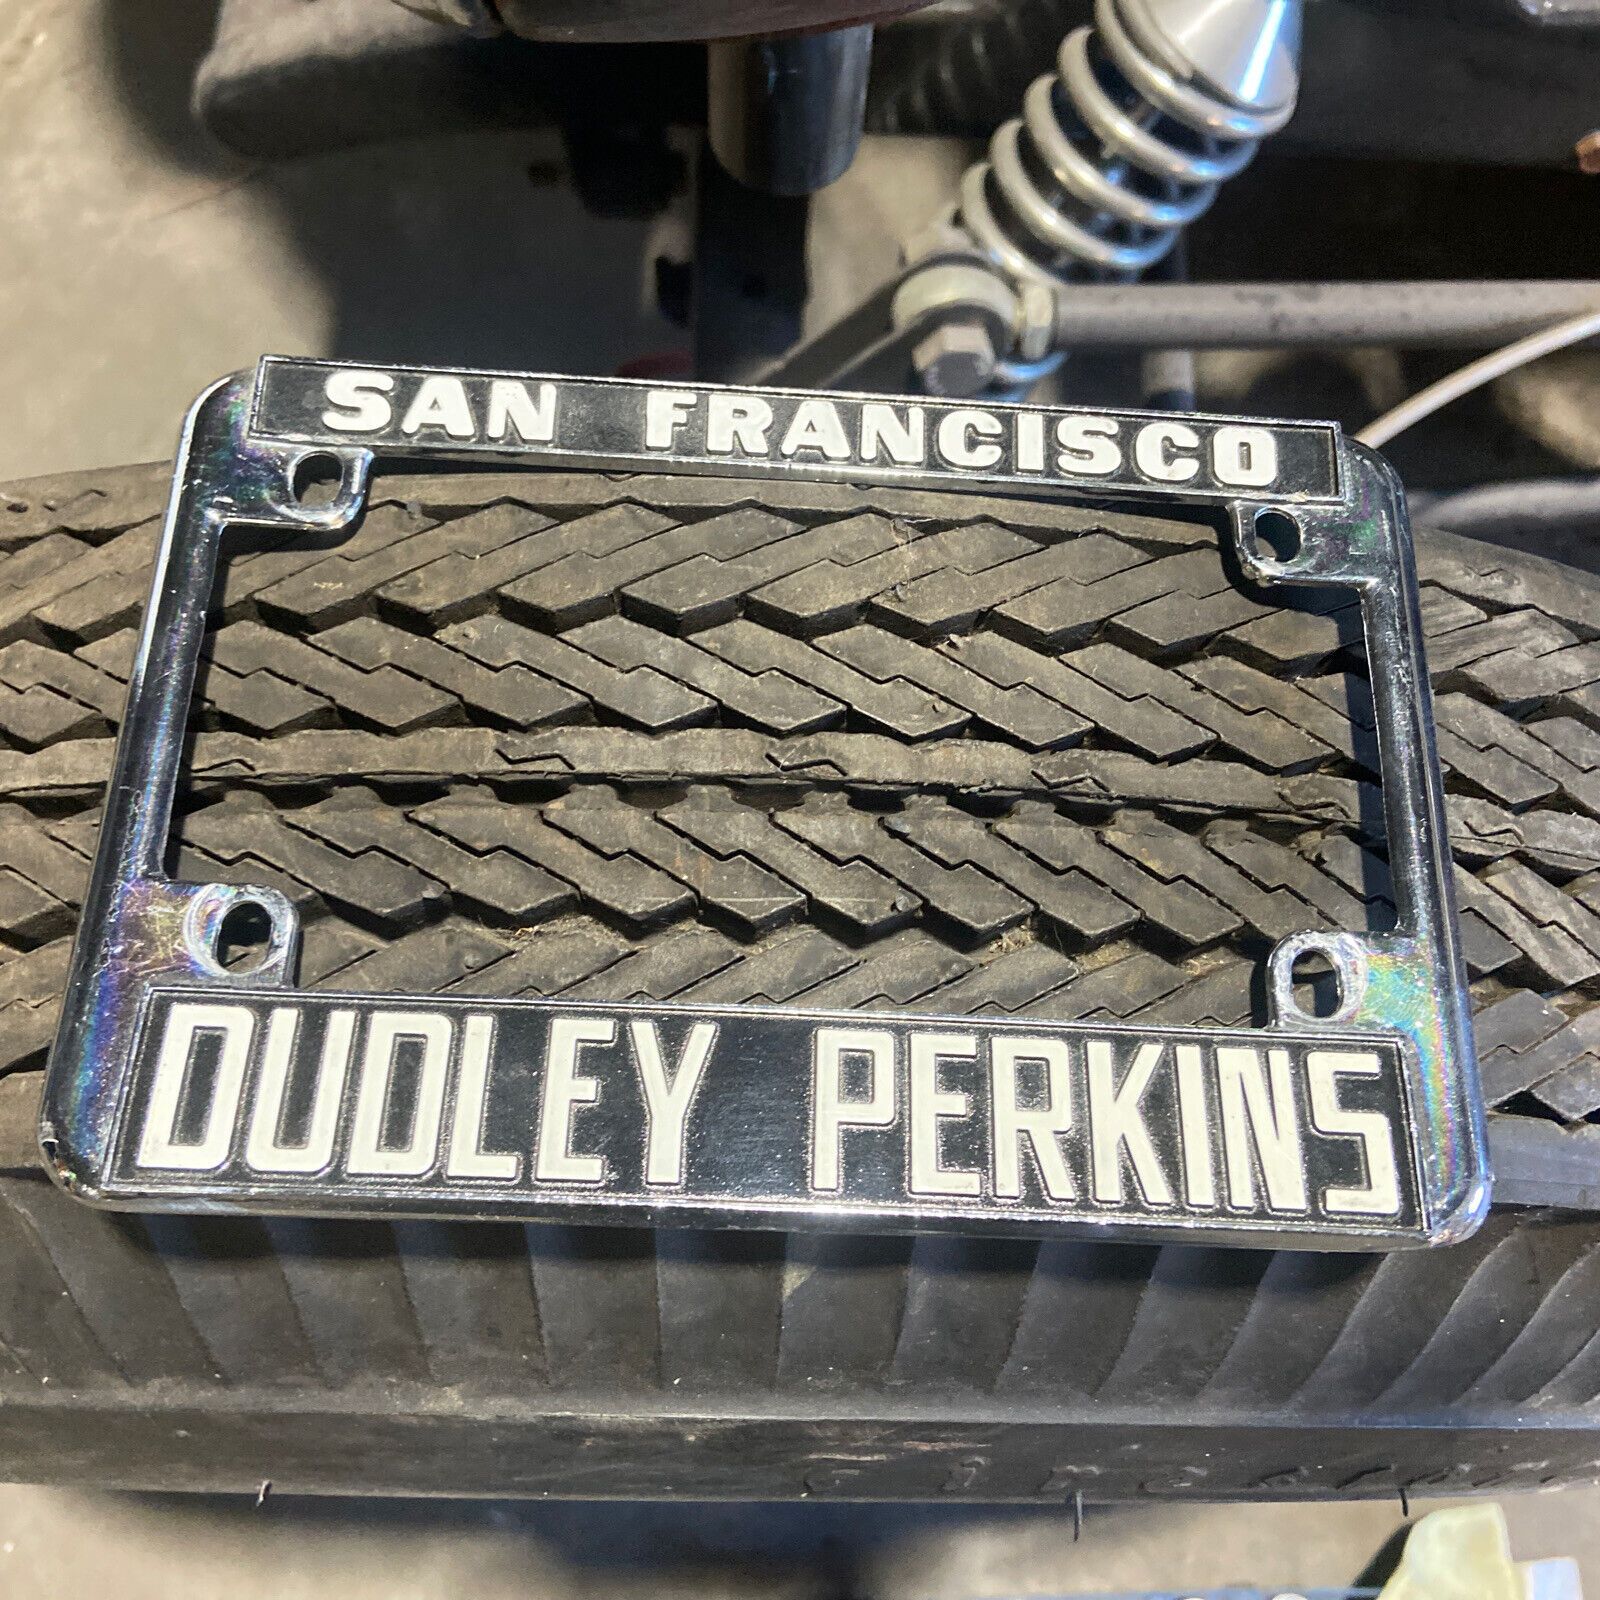 Dudley Perkins Harley Davidson Motorcycle San Francisco License Plate Frame NOS